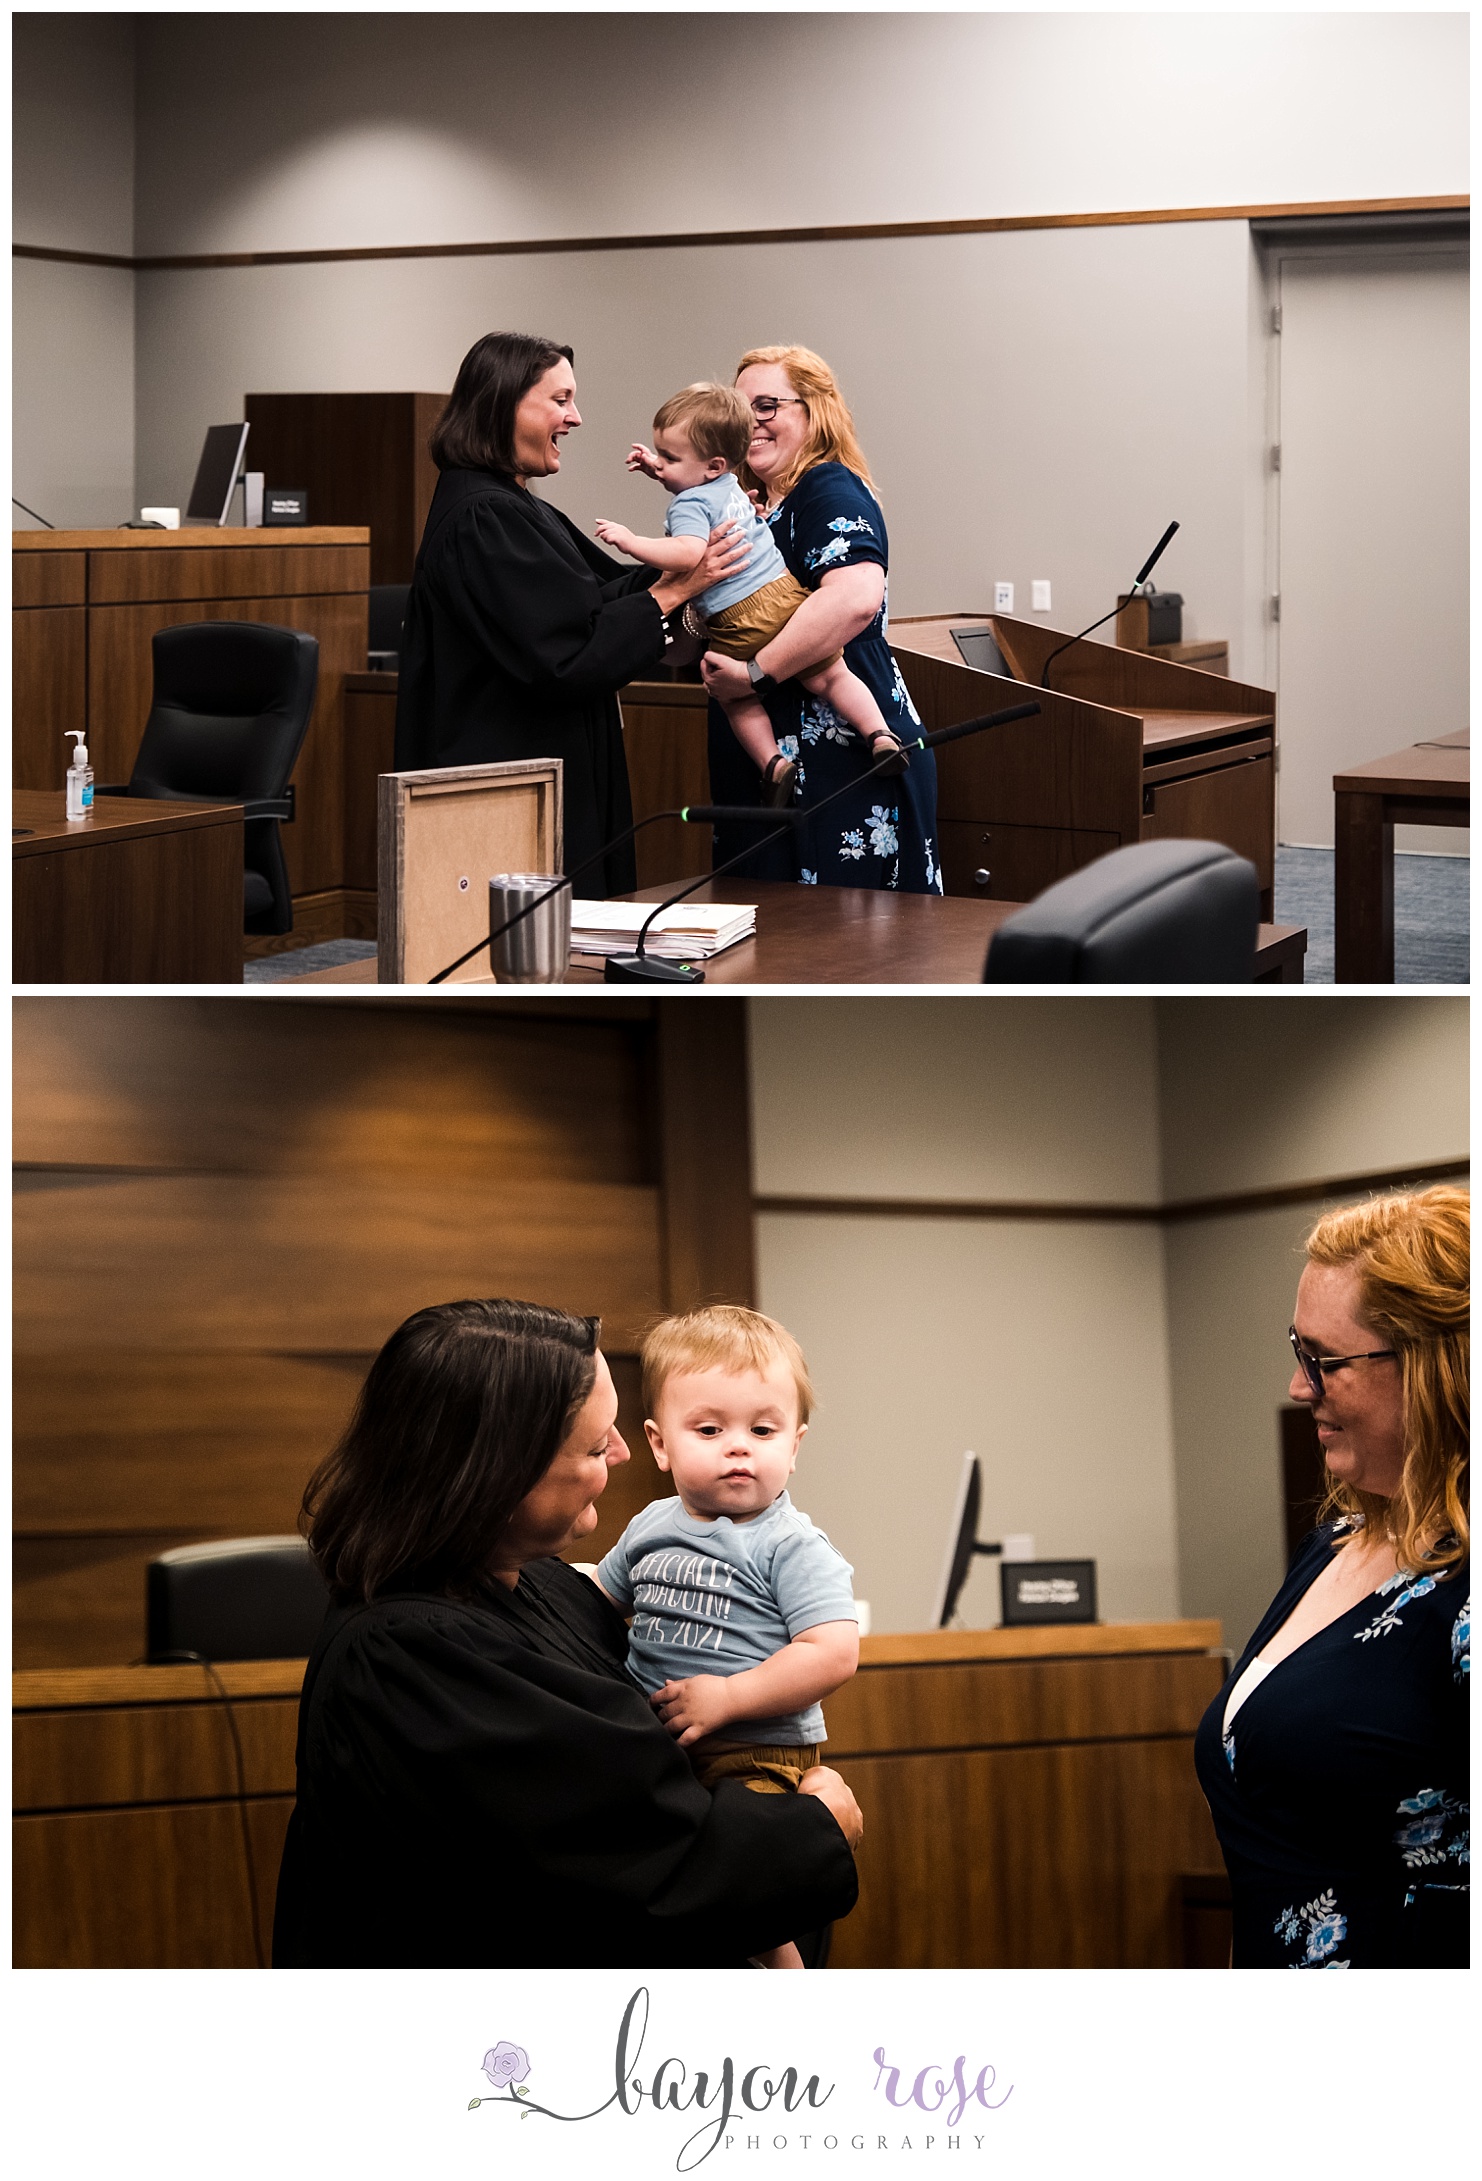 judge holding baby before adoption